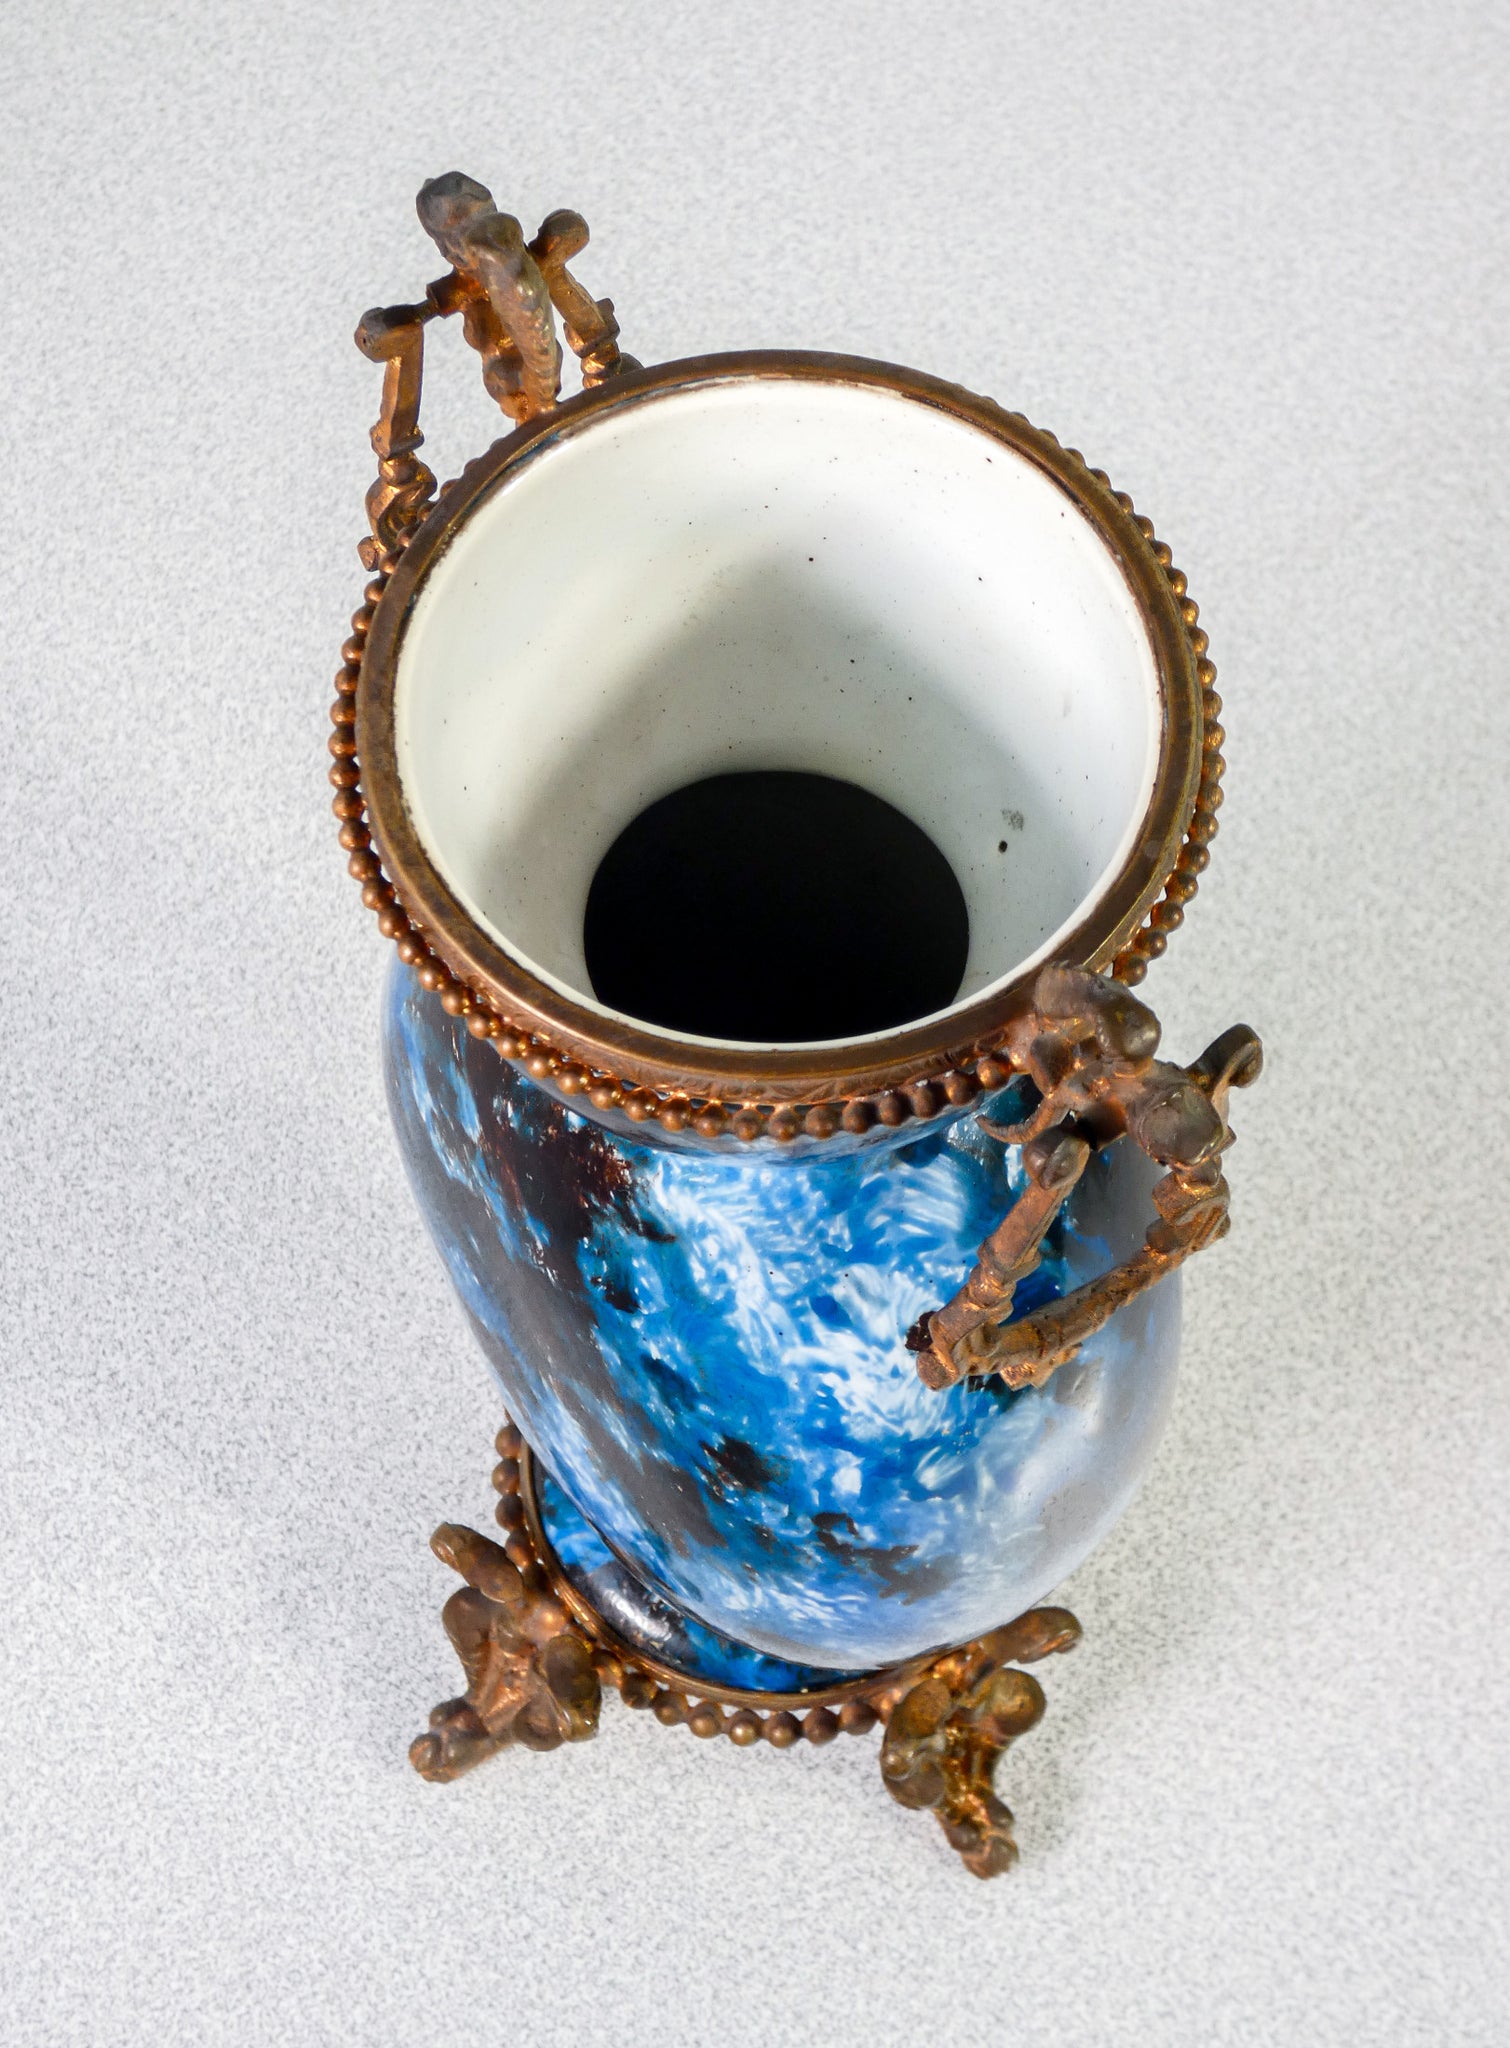 coppia vasi ceramica dipinta a mano smalto bronzo epoca secondo 1800 antica